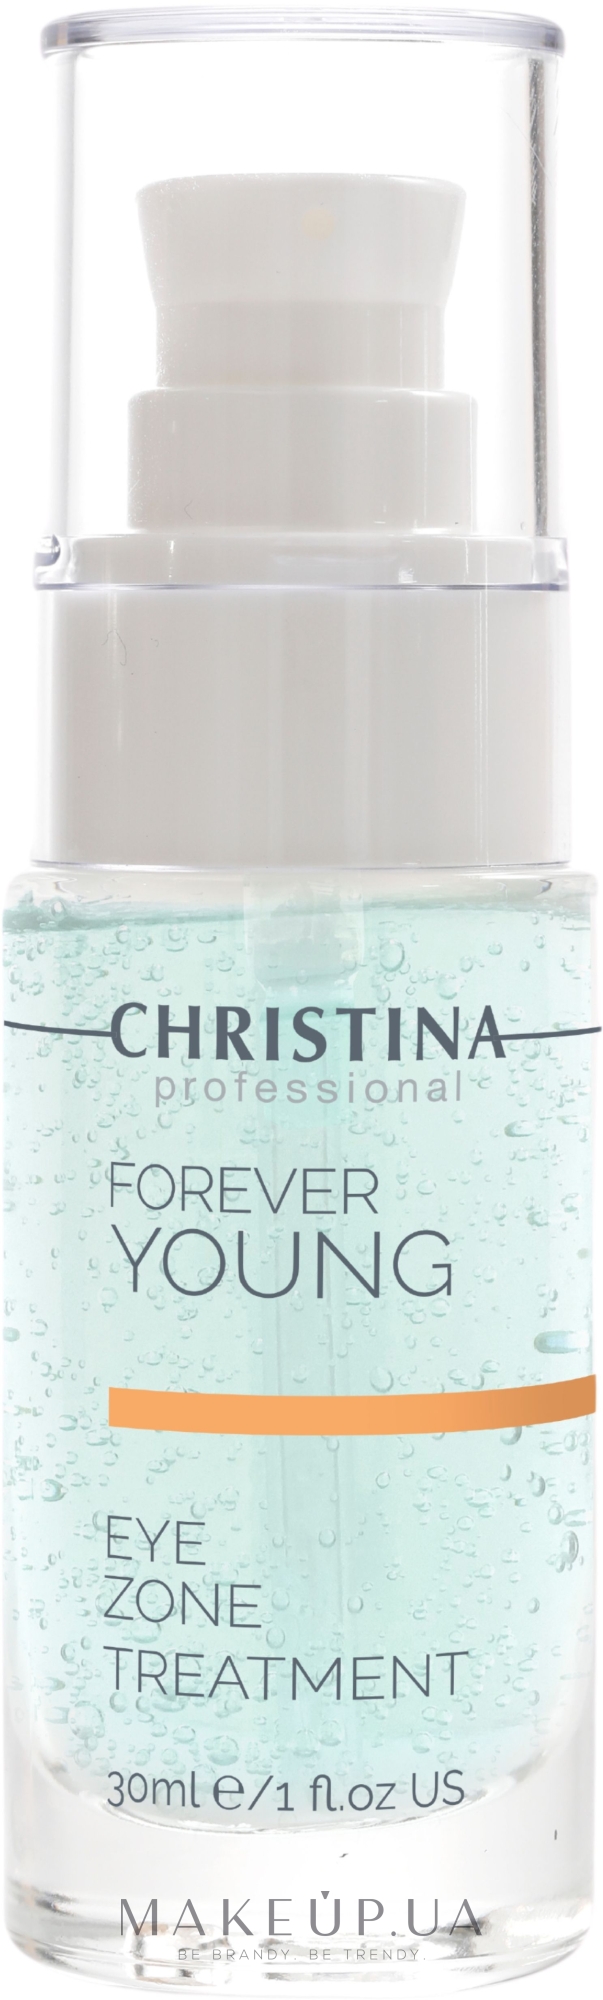 Гель для зоны вокруг глаз с витамином К - Christina Forever Young Eye Zone Treatment — фото 30ml